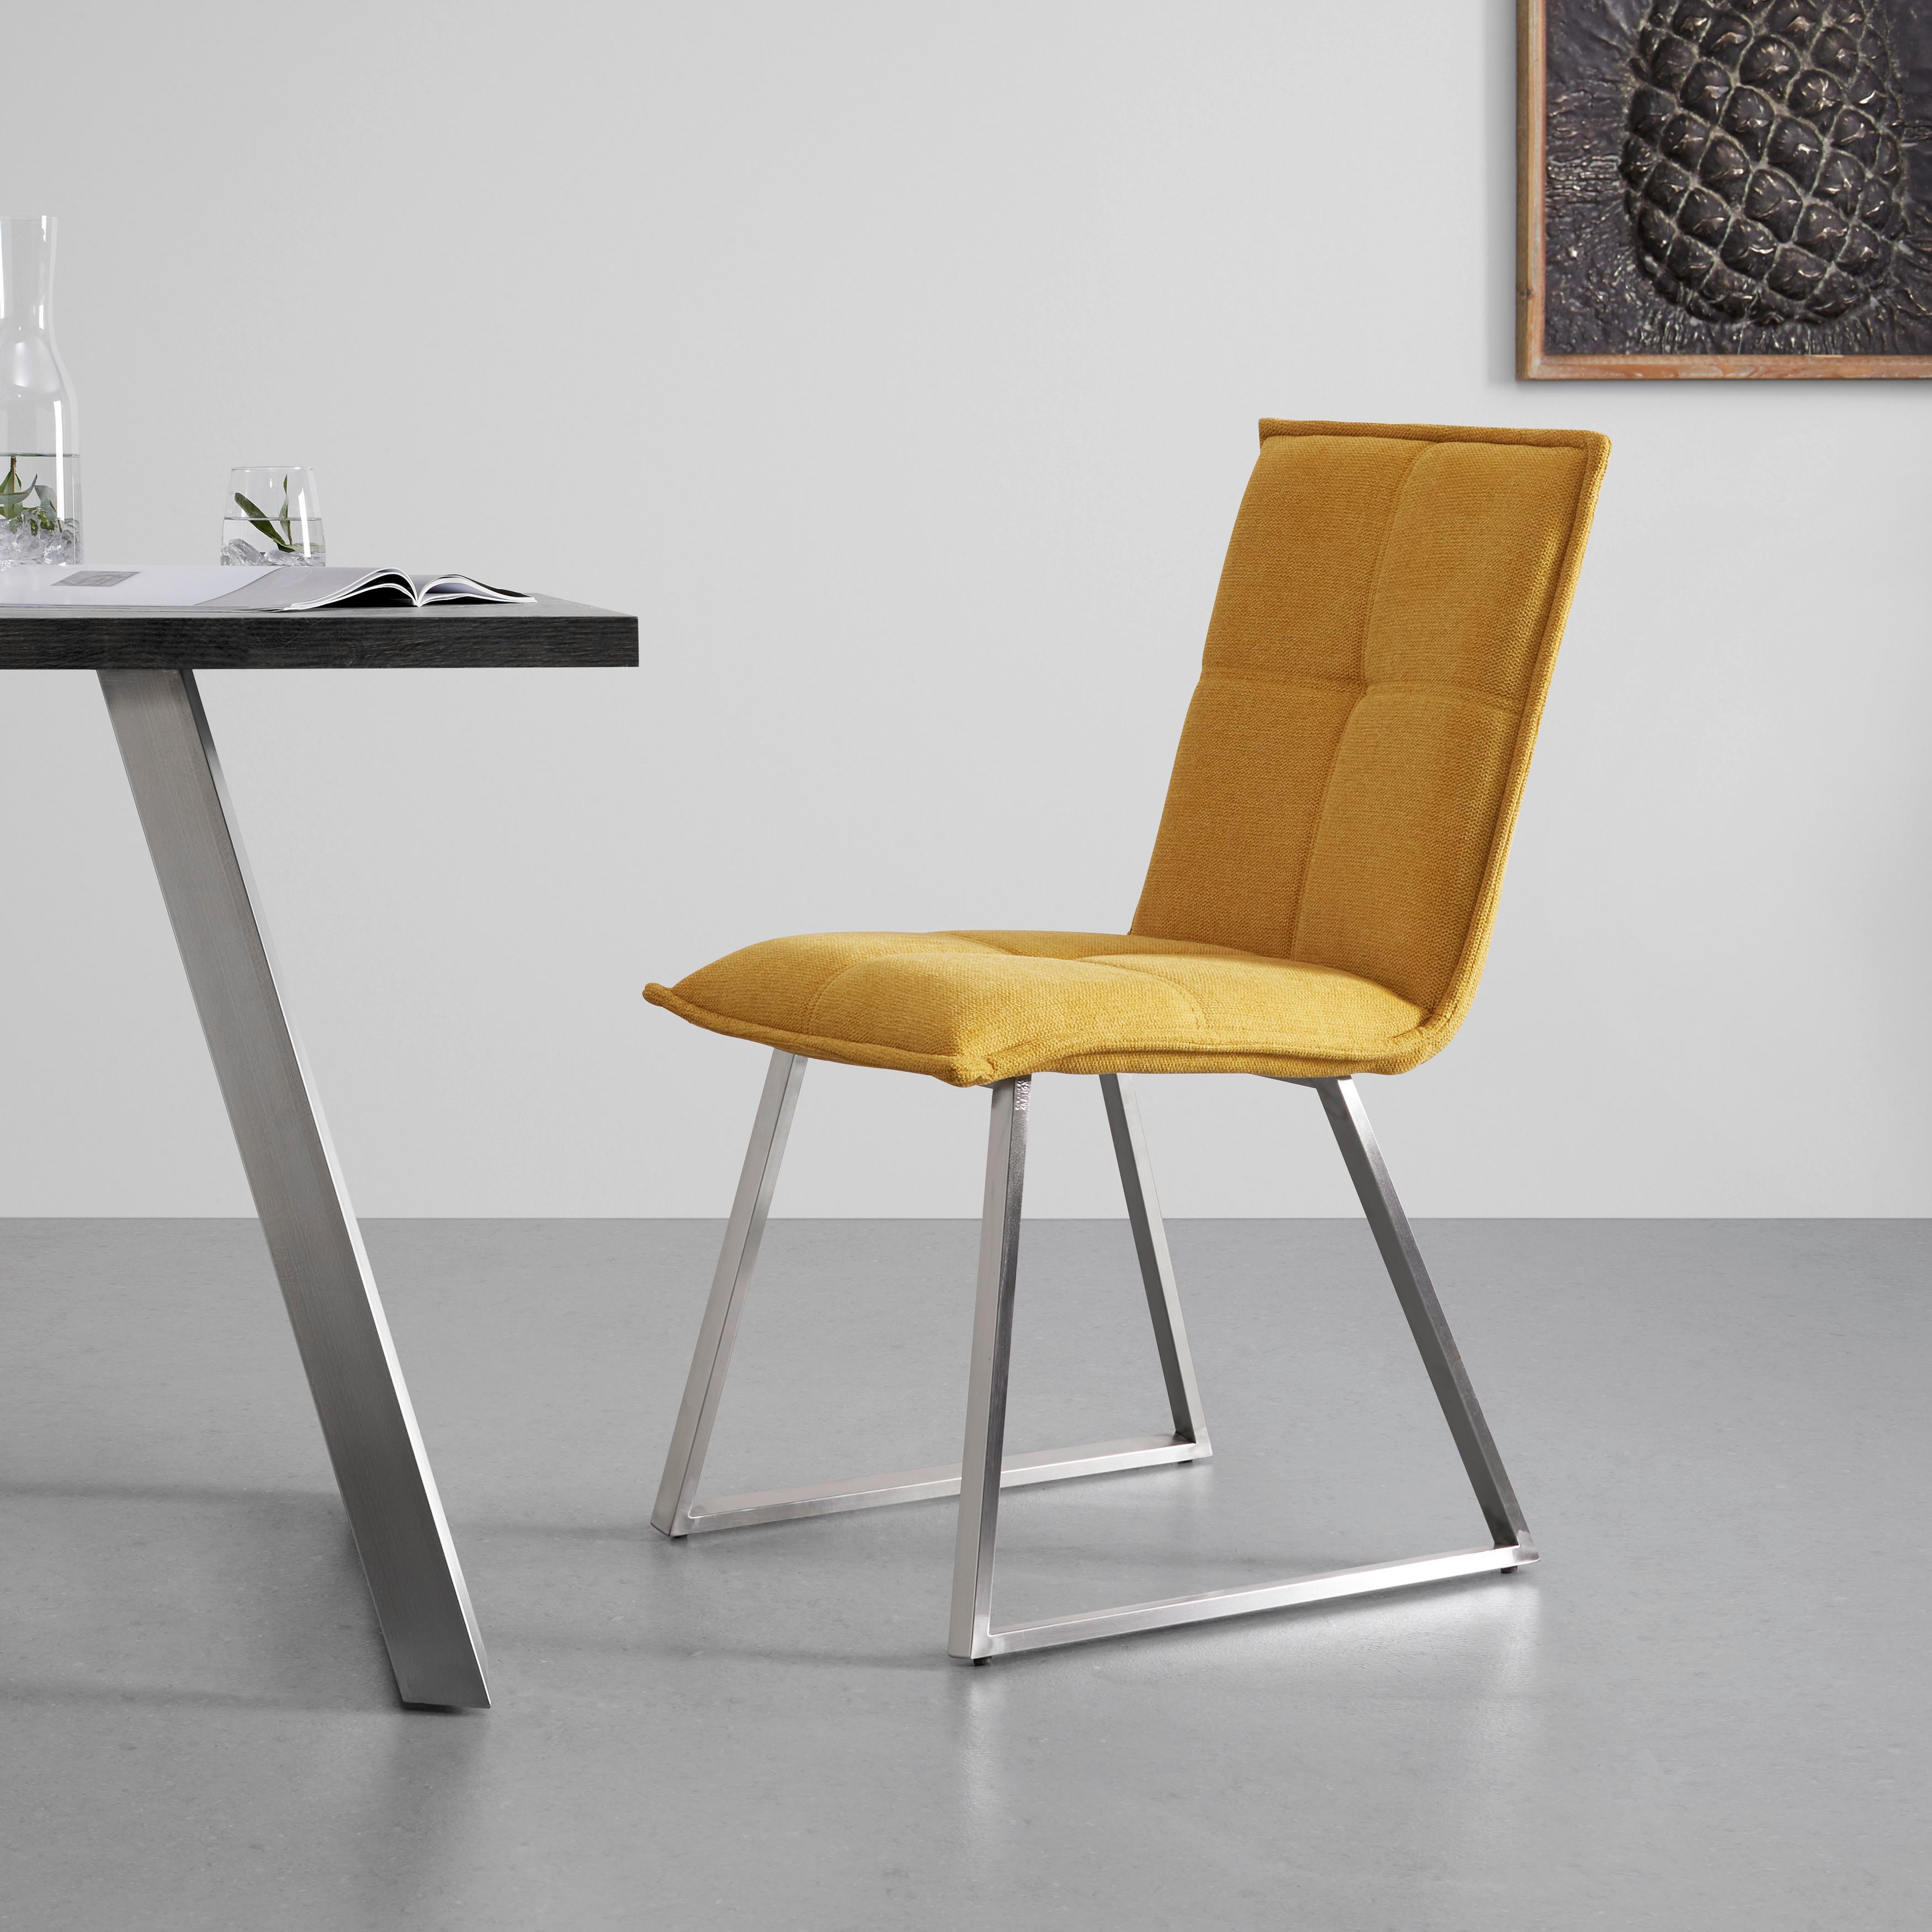 Židle Emilio Žltuá - žlutá/barvy nerez oceli, Moderní, kov/dřevo (46/85/55cm) - Bessagi Home